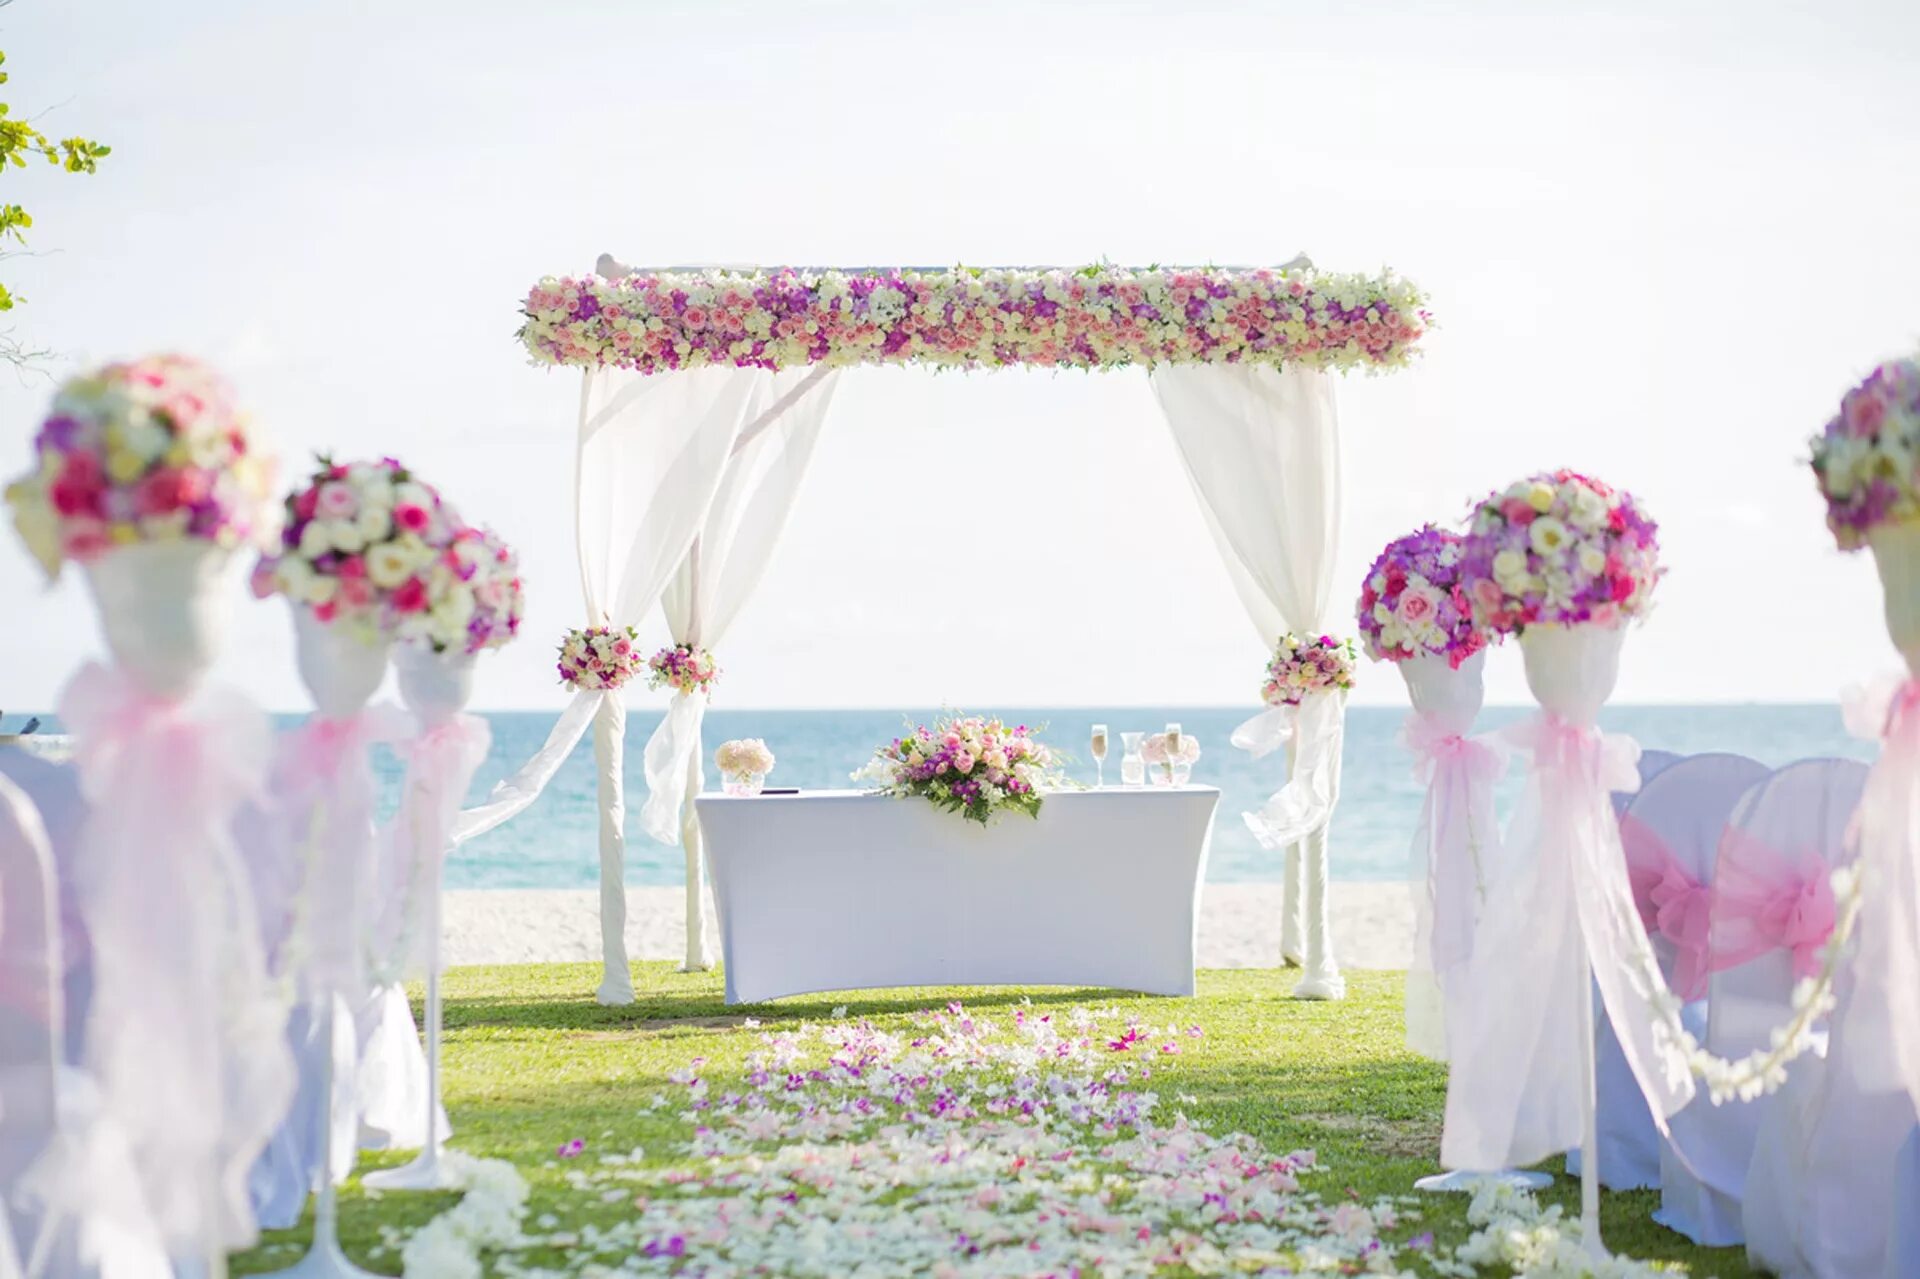 Арка "Свадебная". Арки для свадебной церемонии. Свадебная Цветочная арка. Свадебная арка из цветов.